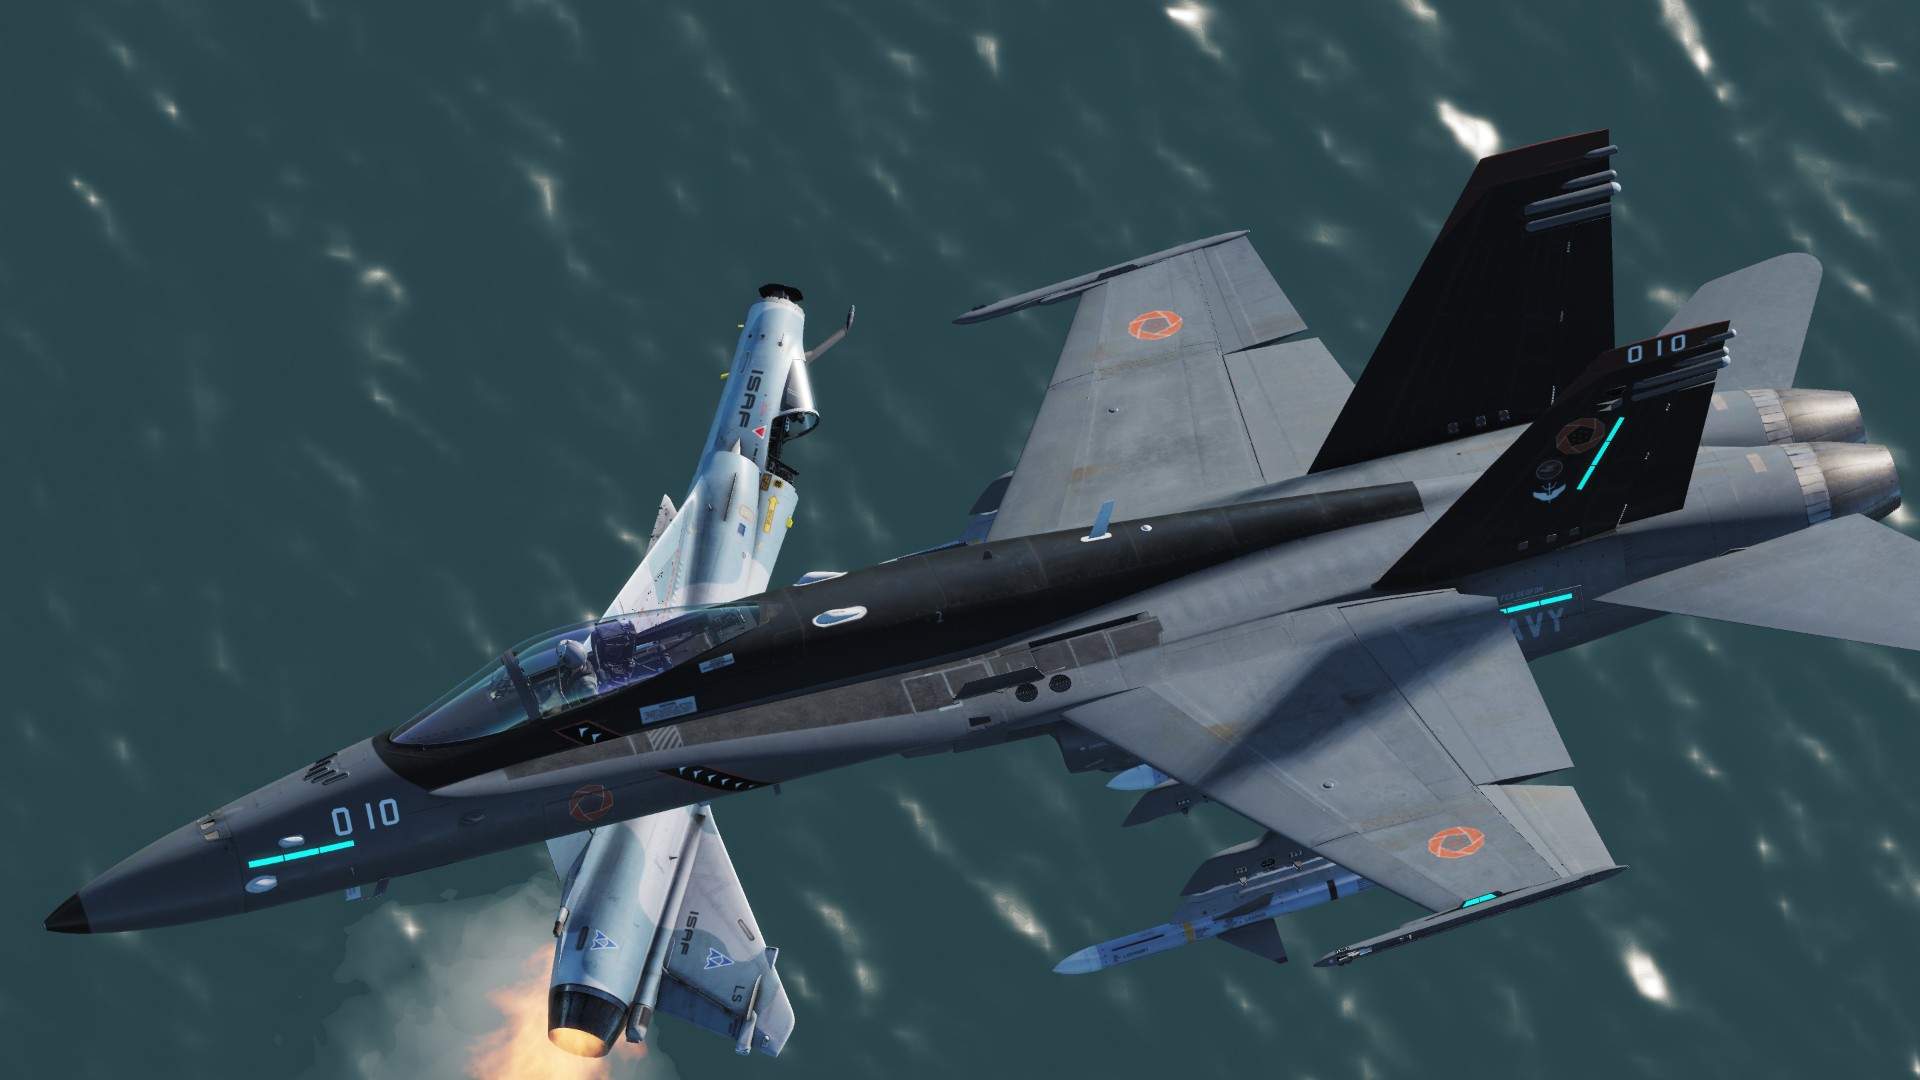 8 f 18 11 f. F/A-18c Hornet Агрессор Су-34. Ace Combat f18. Ace Combat 7 f/a 18f. F/A-18 Agressor.